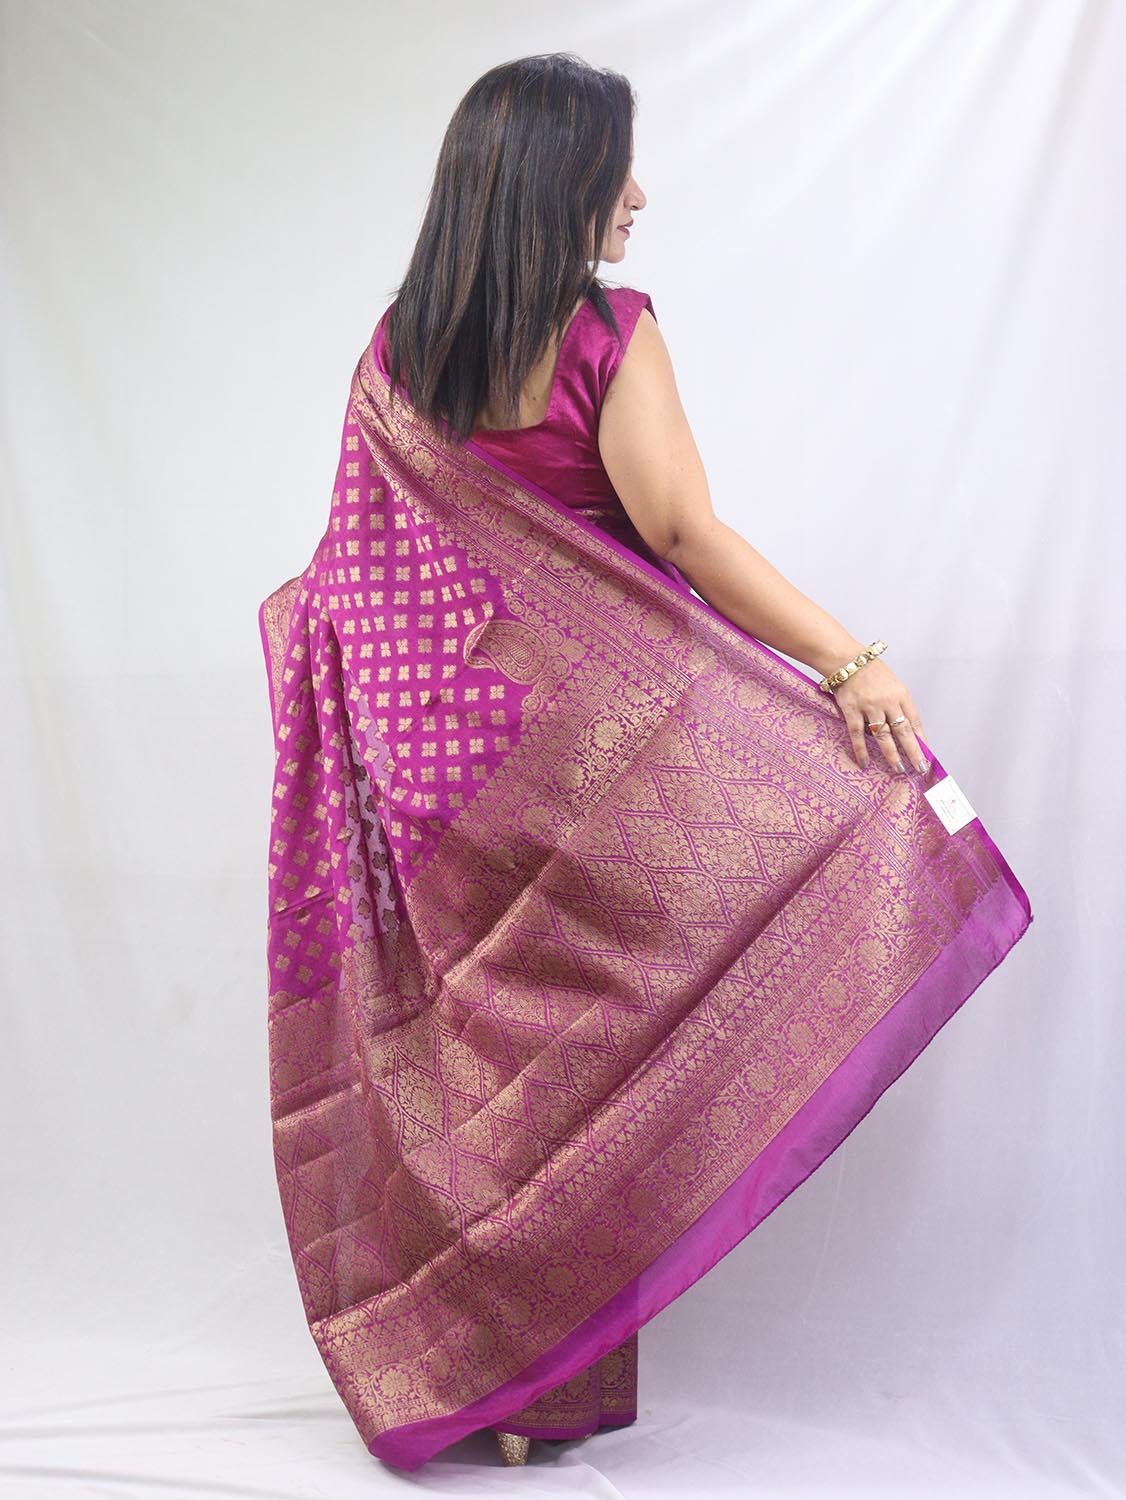 Regal Charm: Purple Banarasi Silk Saree for Elegant Occasions